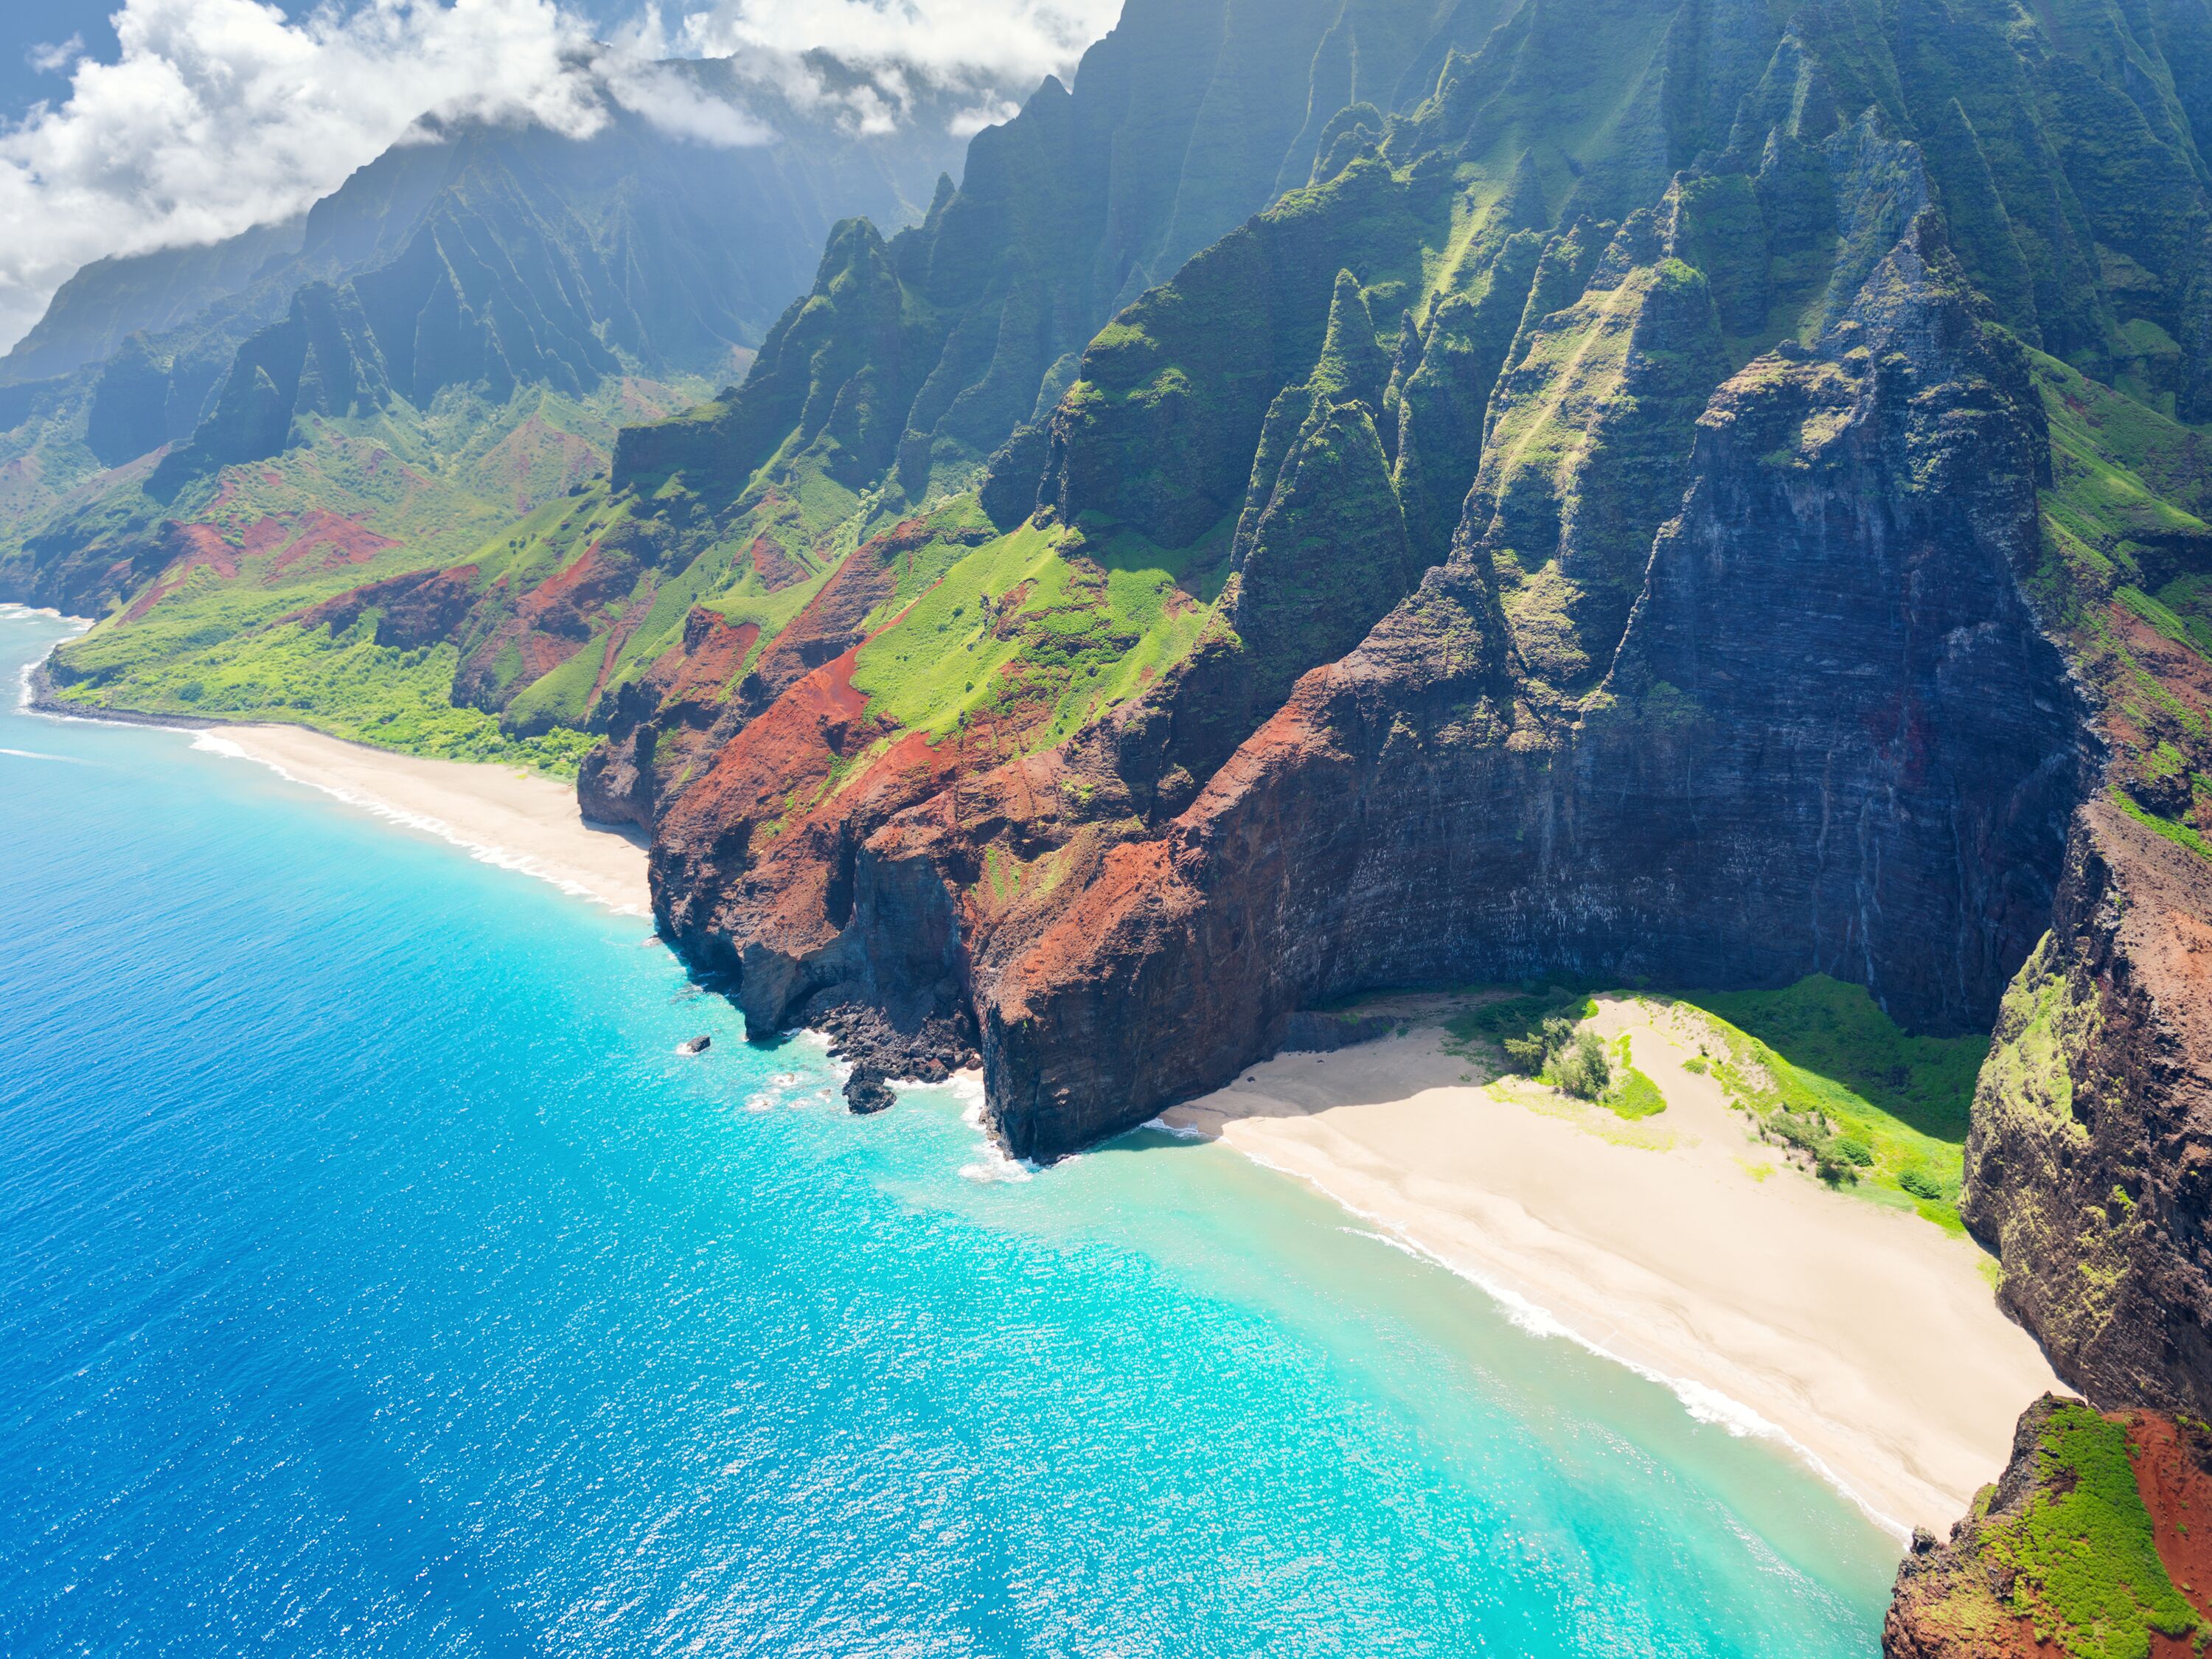 Kauai Honeymoon: Weather and Travel Guide